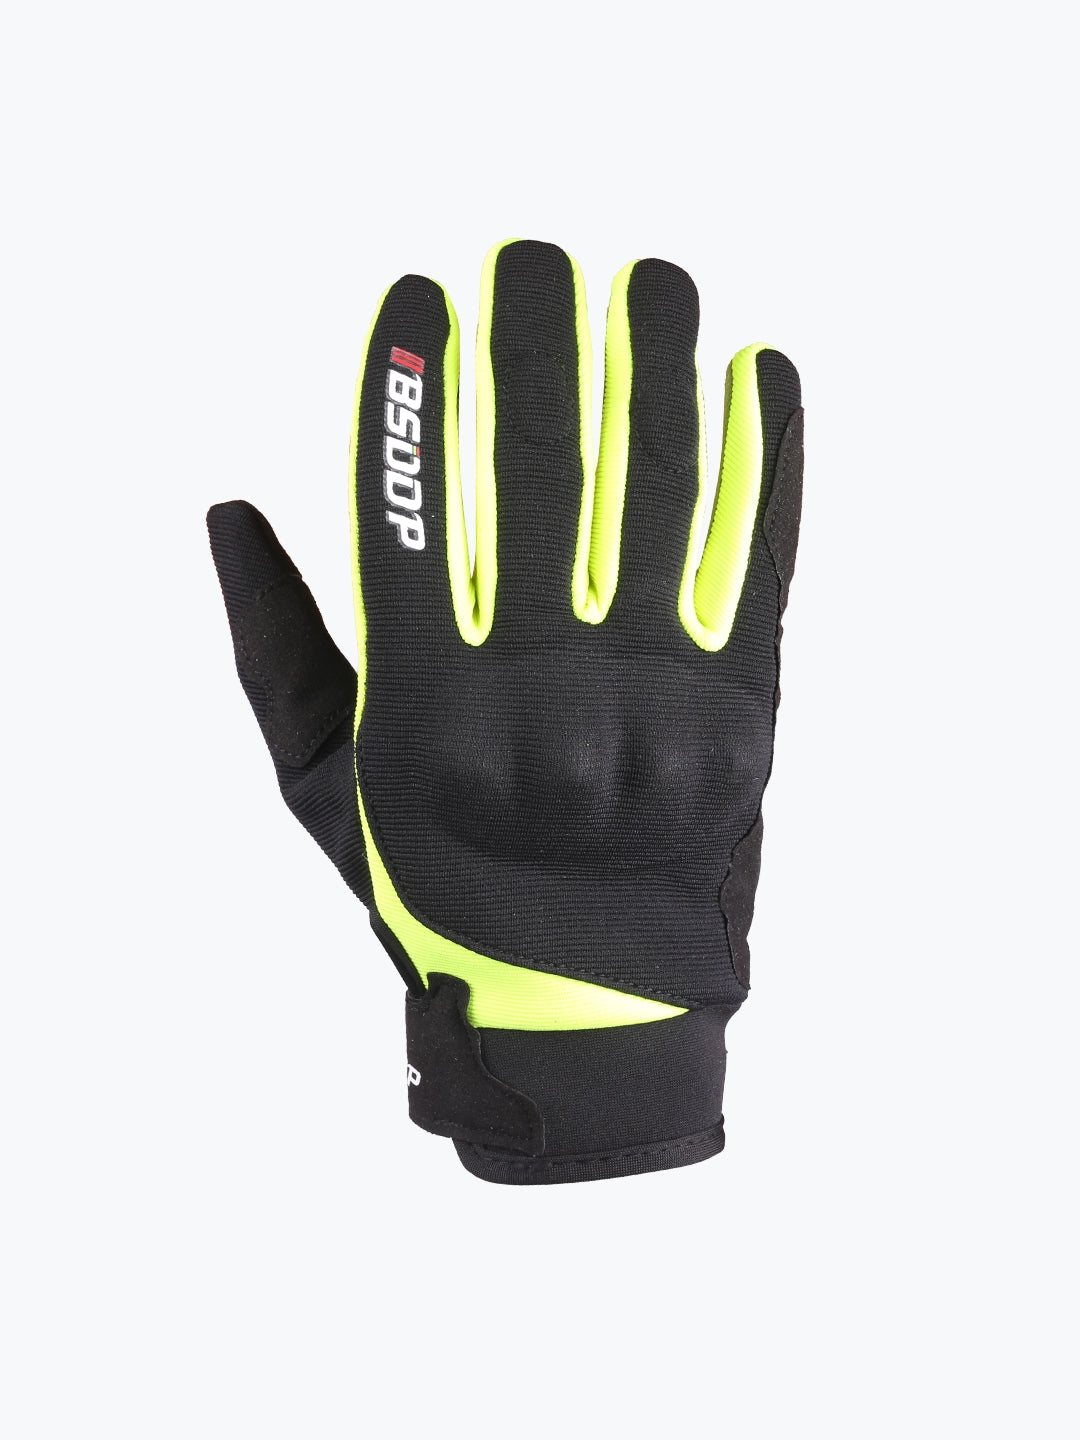 BSDDP Gloves A0143 Black Green